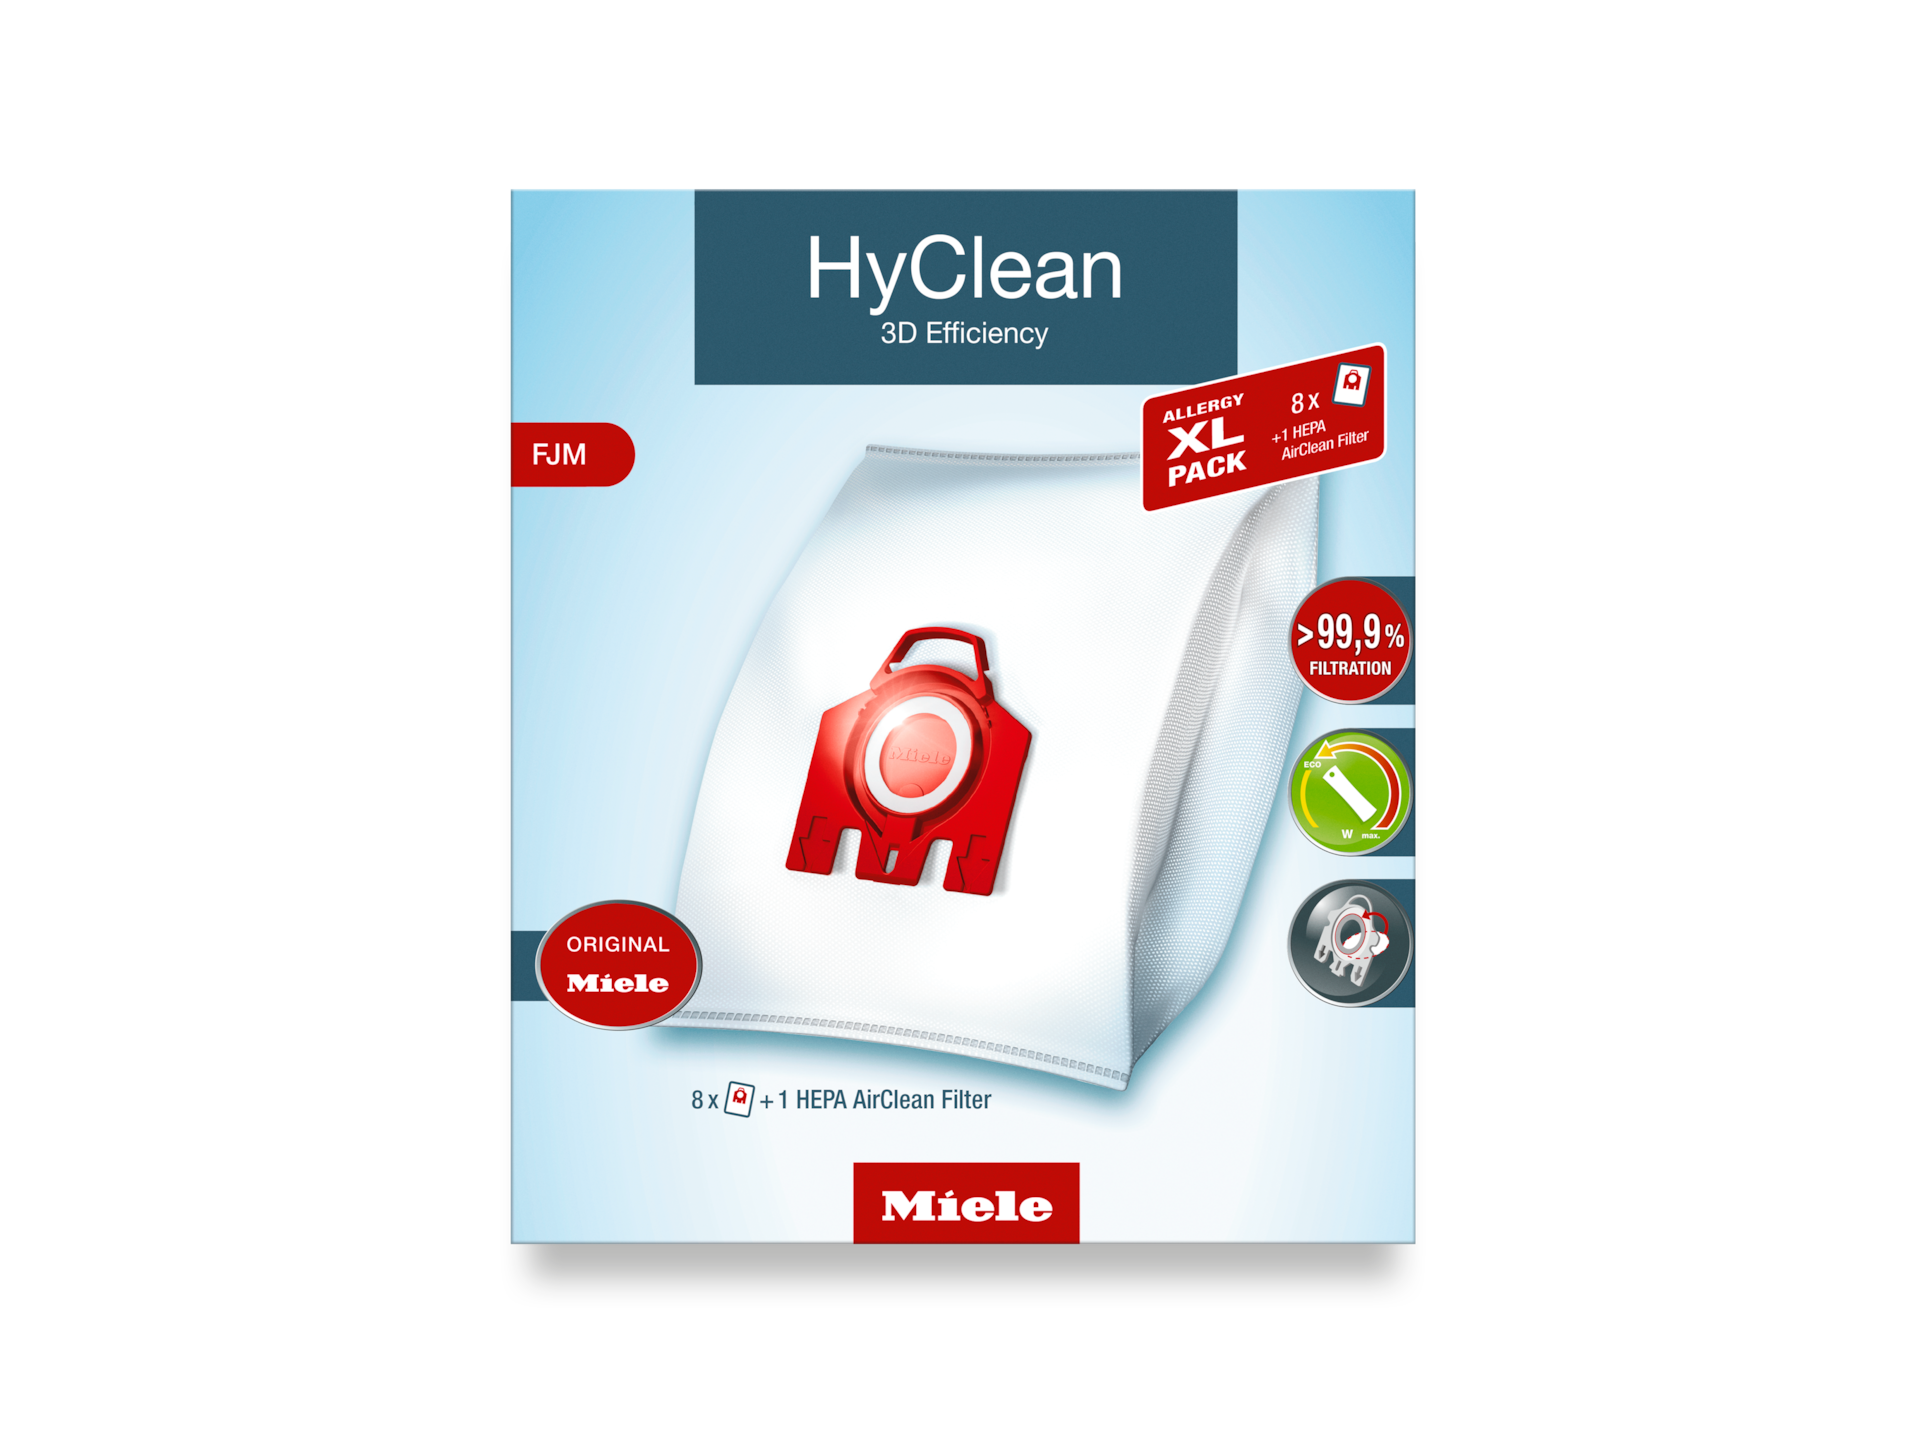 Tilbehør - FJM Allergy XL HyClean 3D - 1